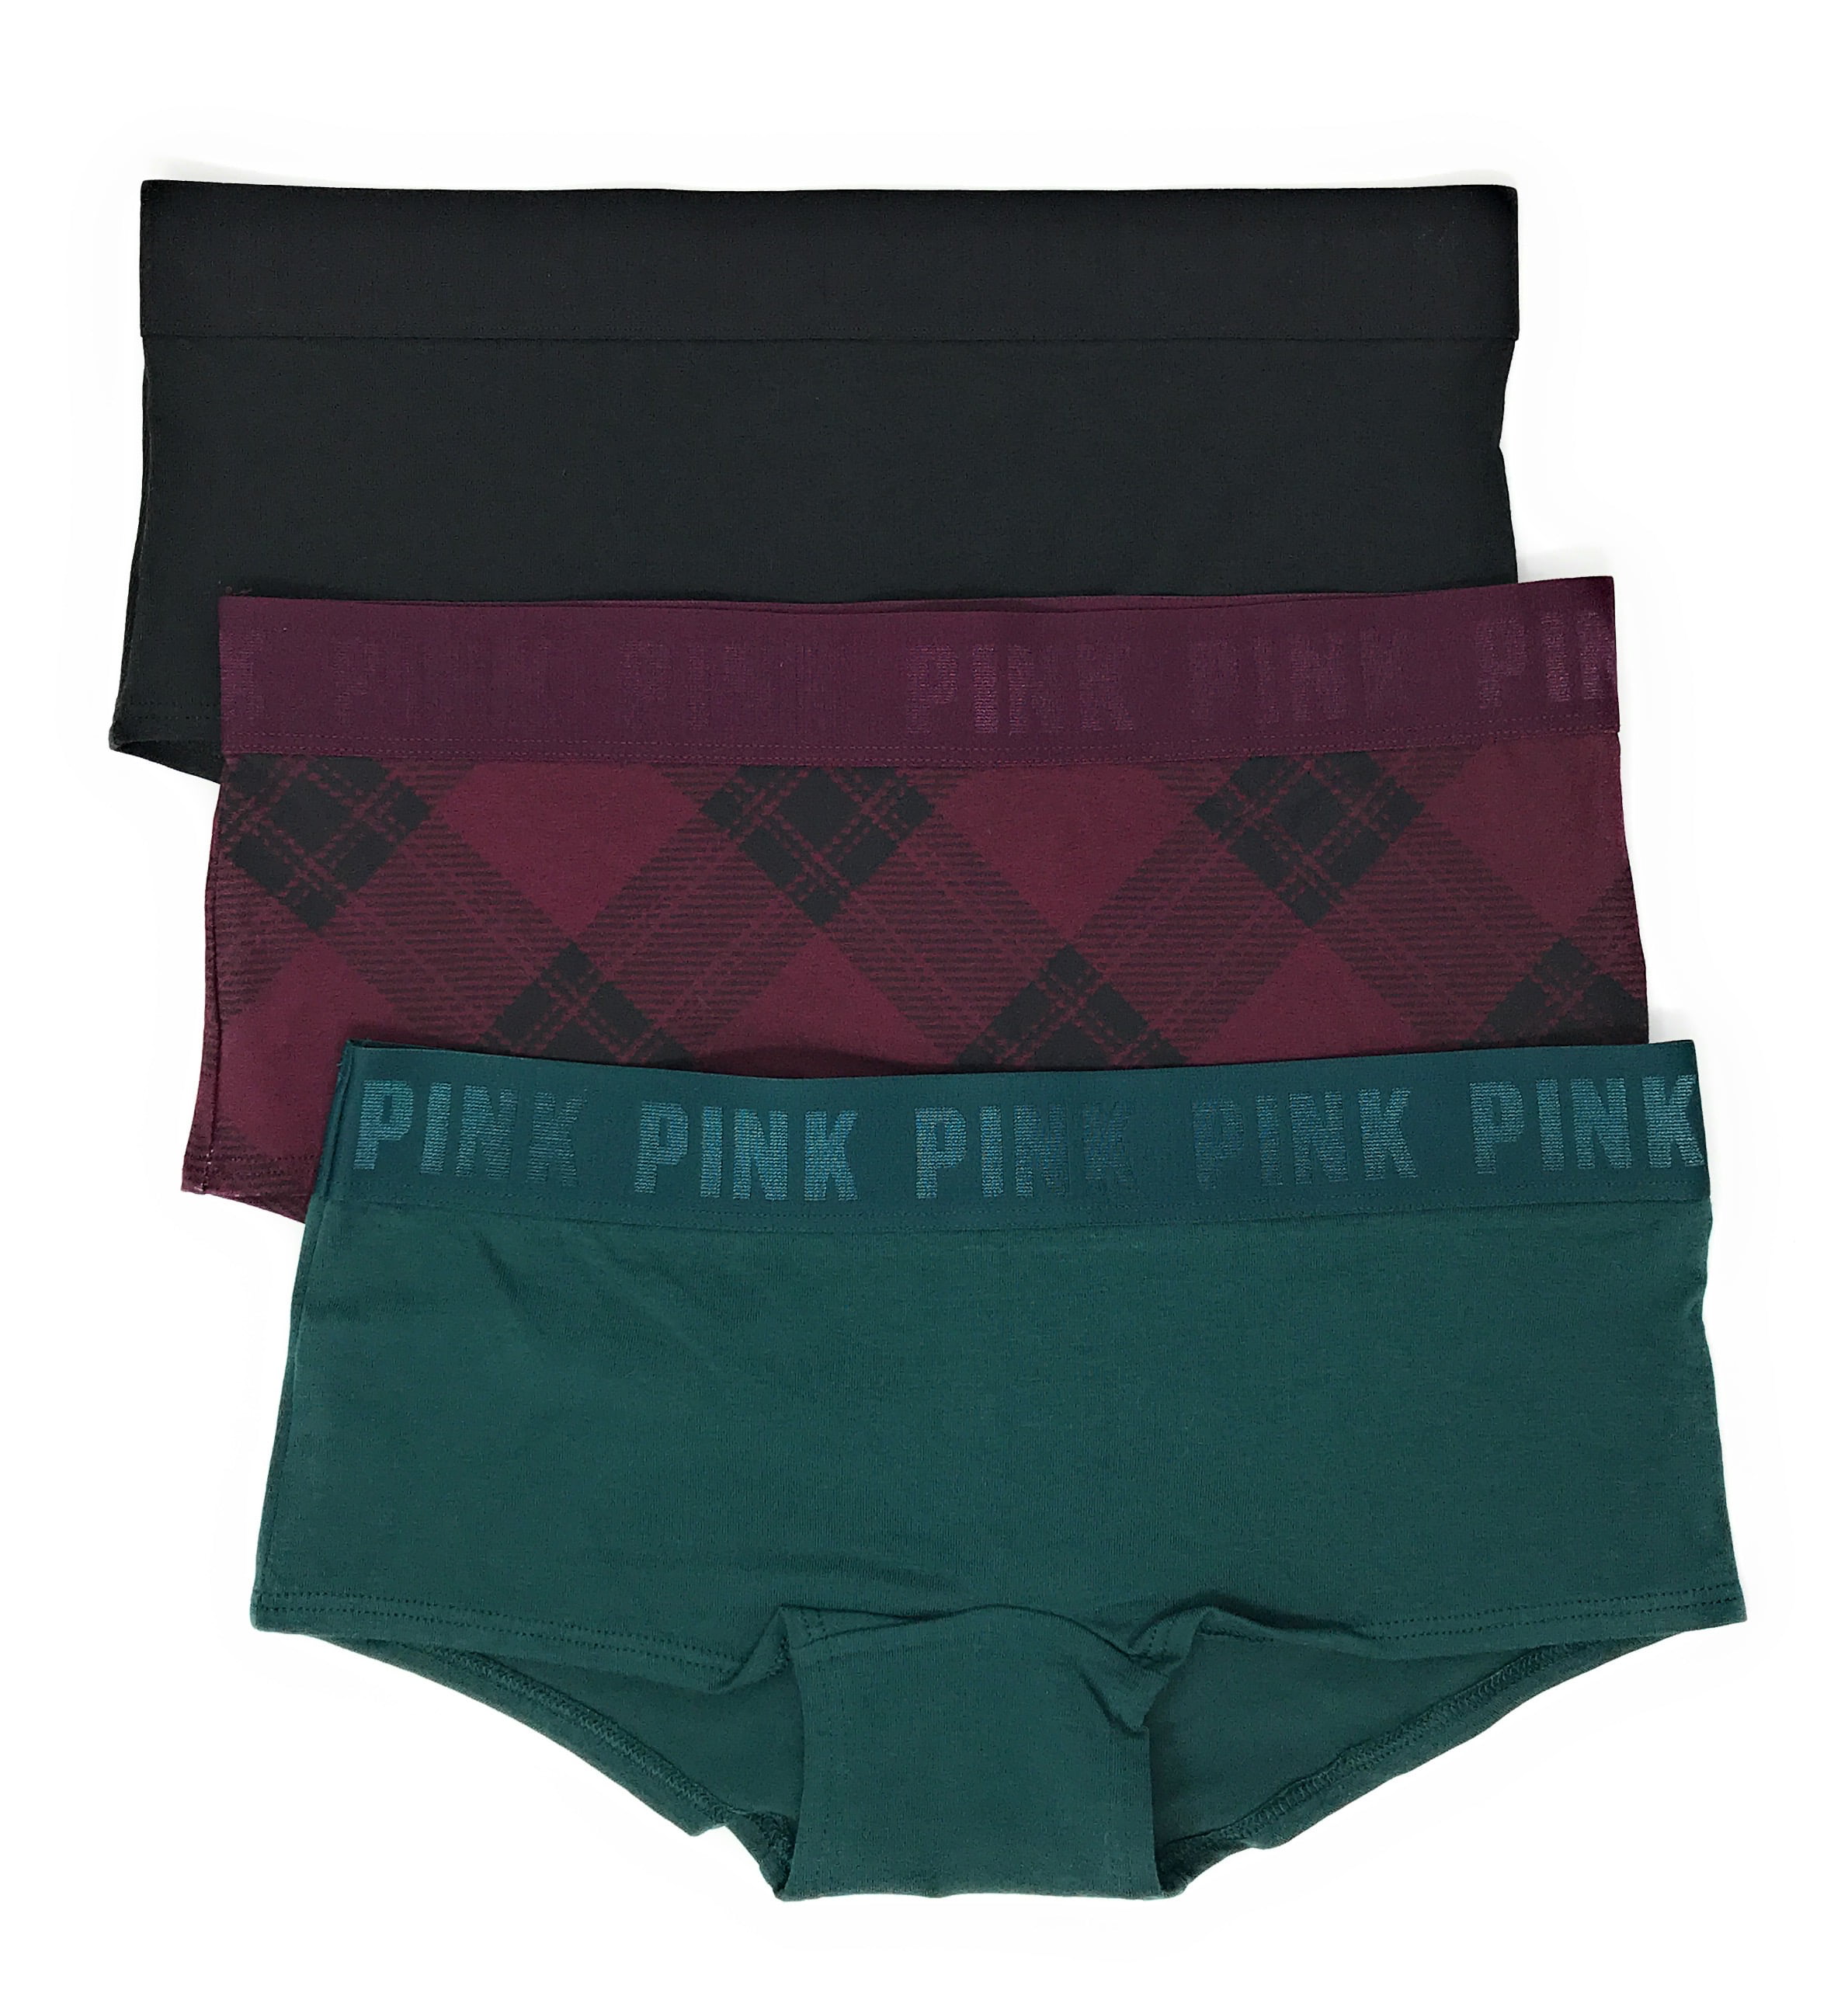 Victoria's Secret PINK Boyshort Panty Set of 3 Small Black Shine